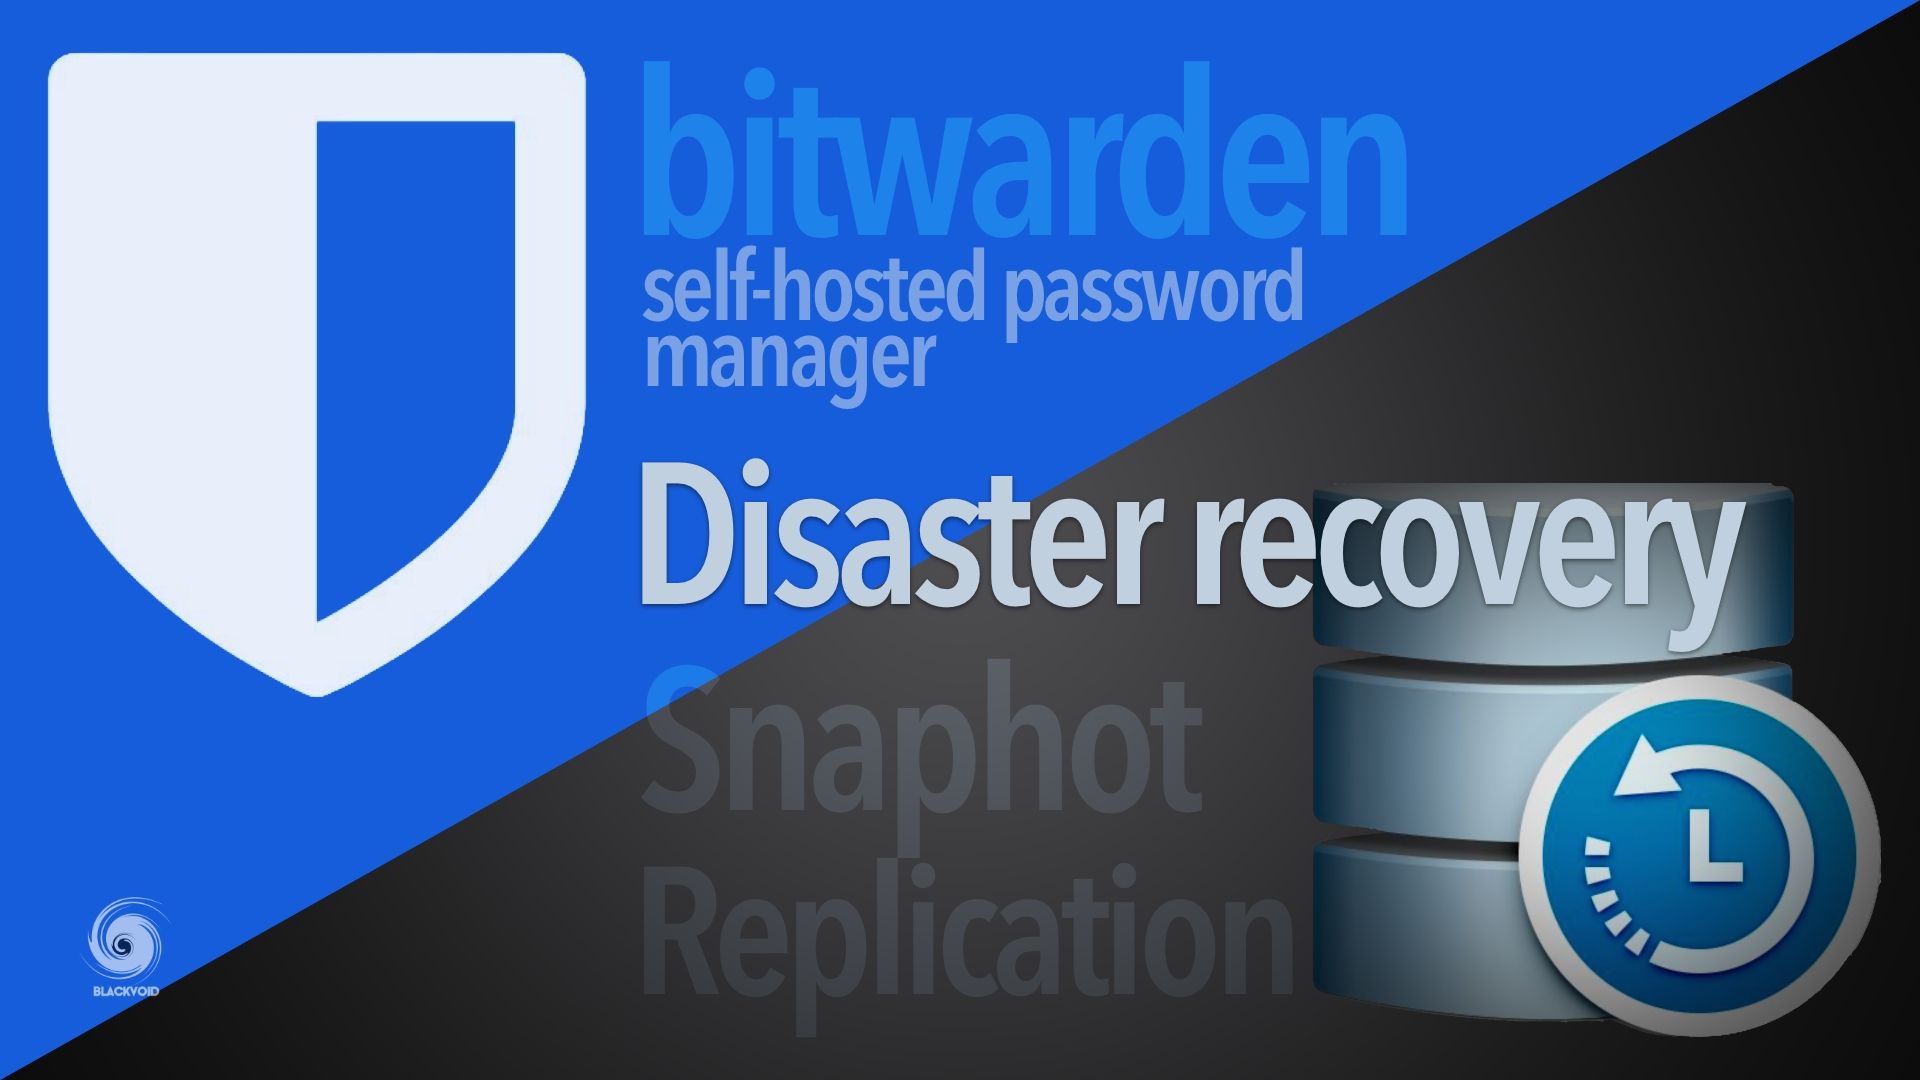 Disaster recovery using Snapshot & Replication (Bitwarden scenario using Docker)